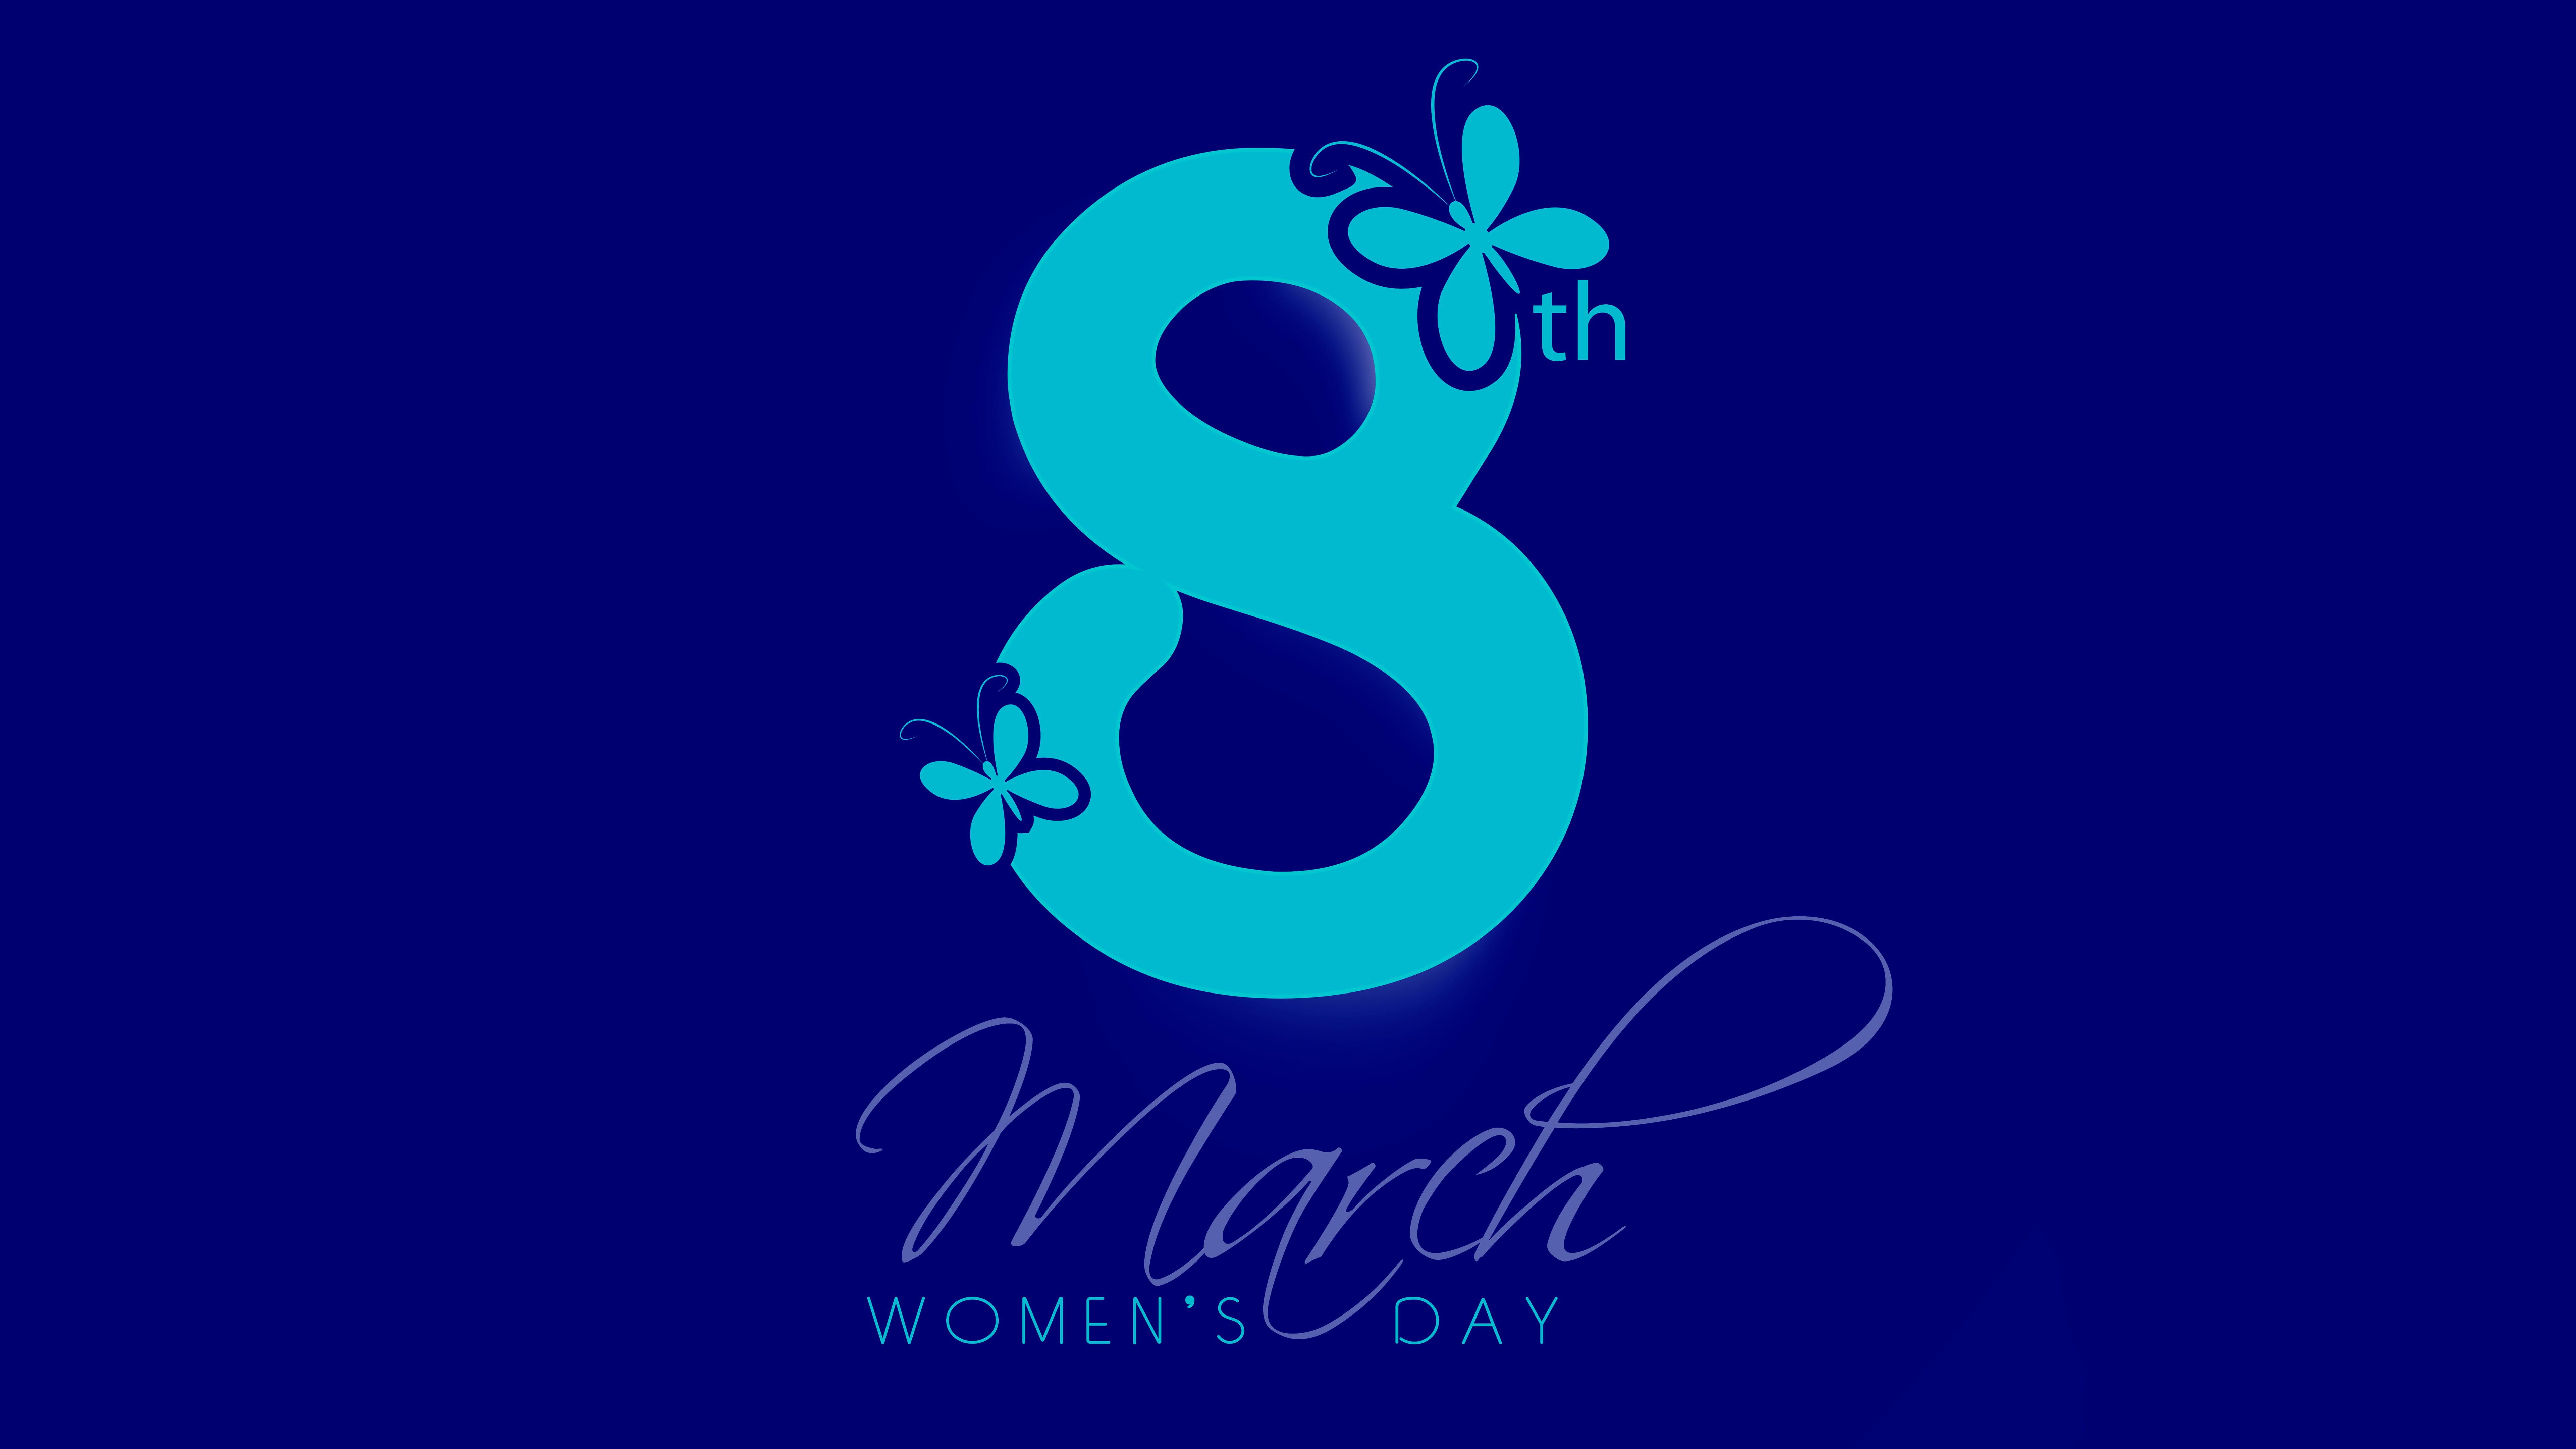 Blue March 8th Women's Day logo HD wallpaper